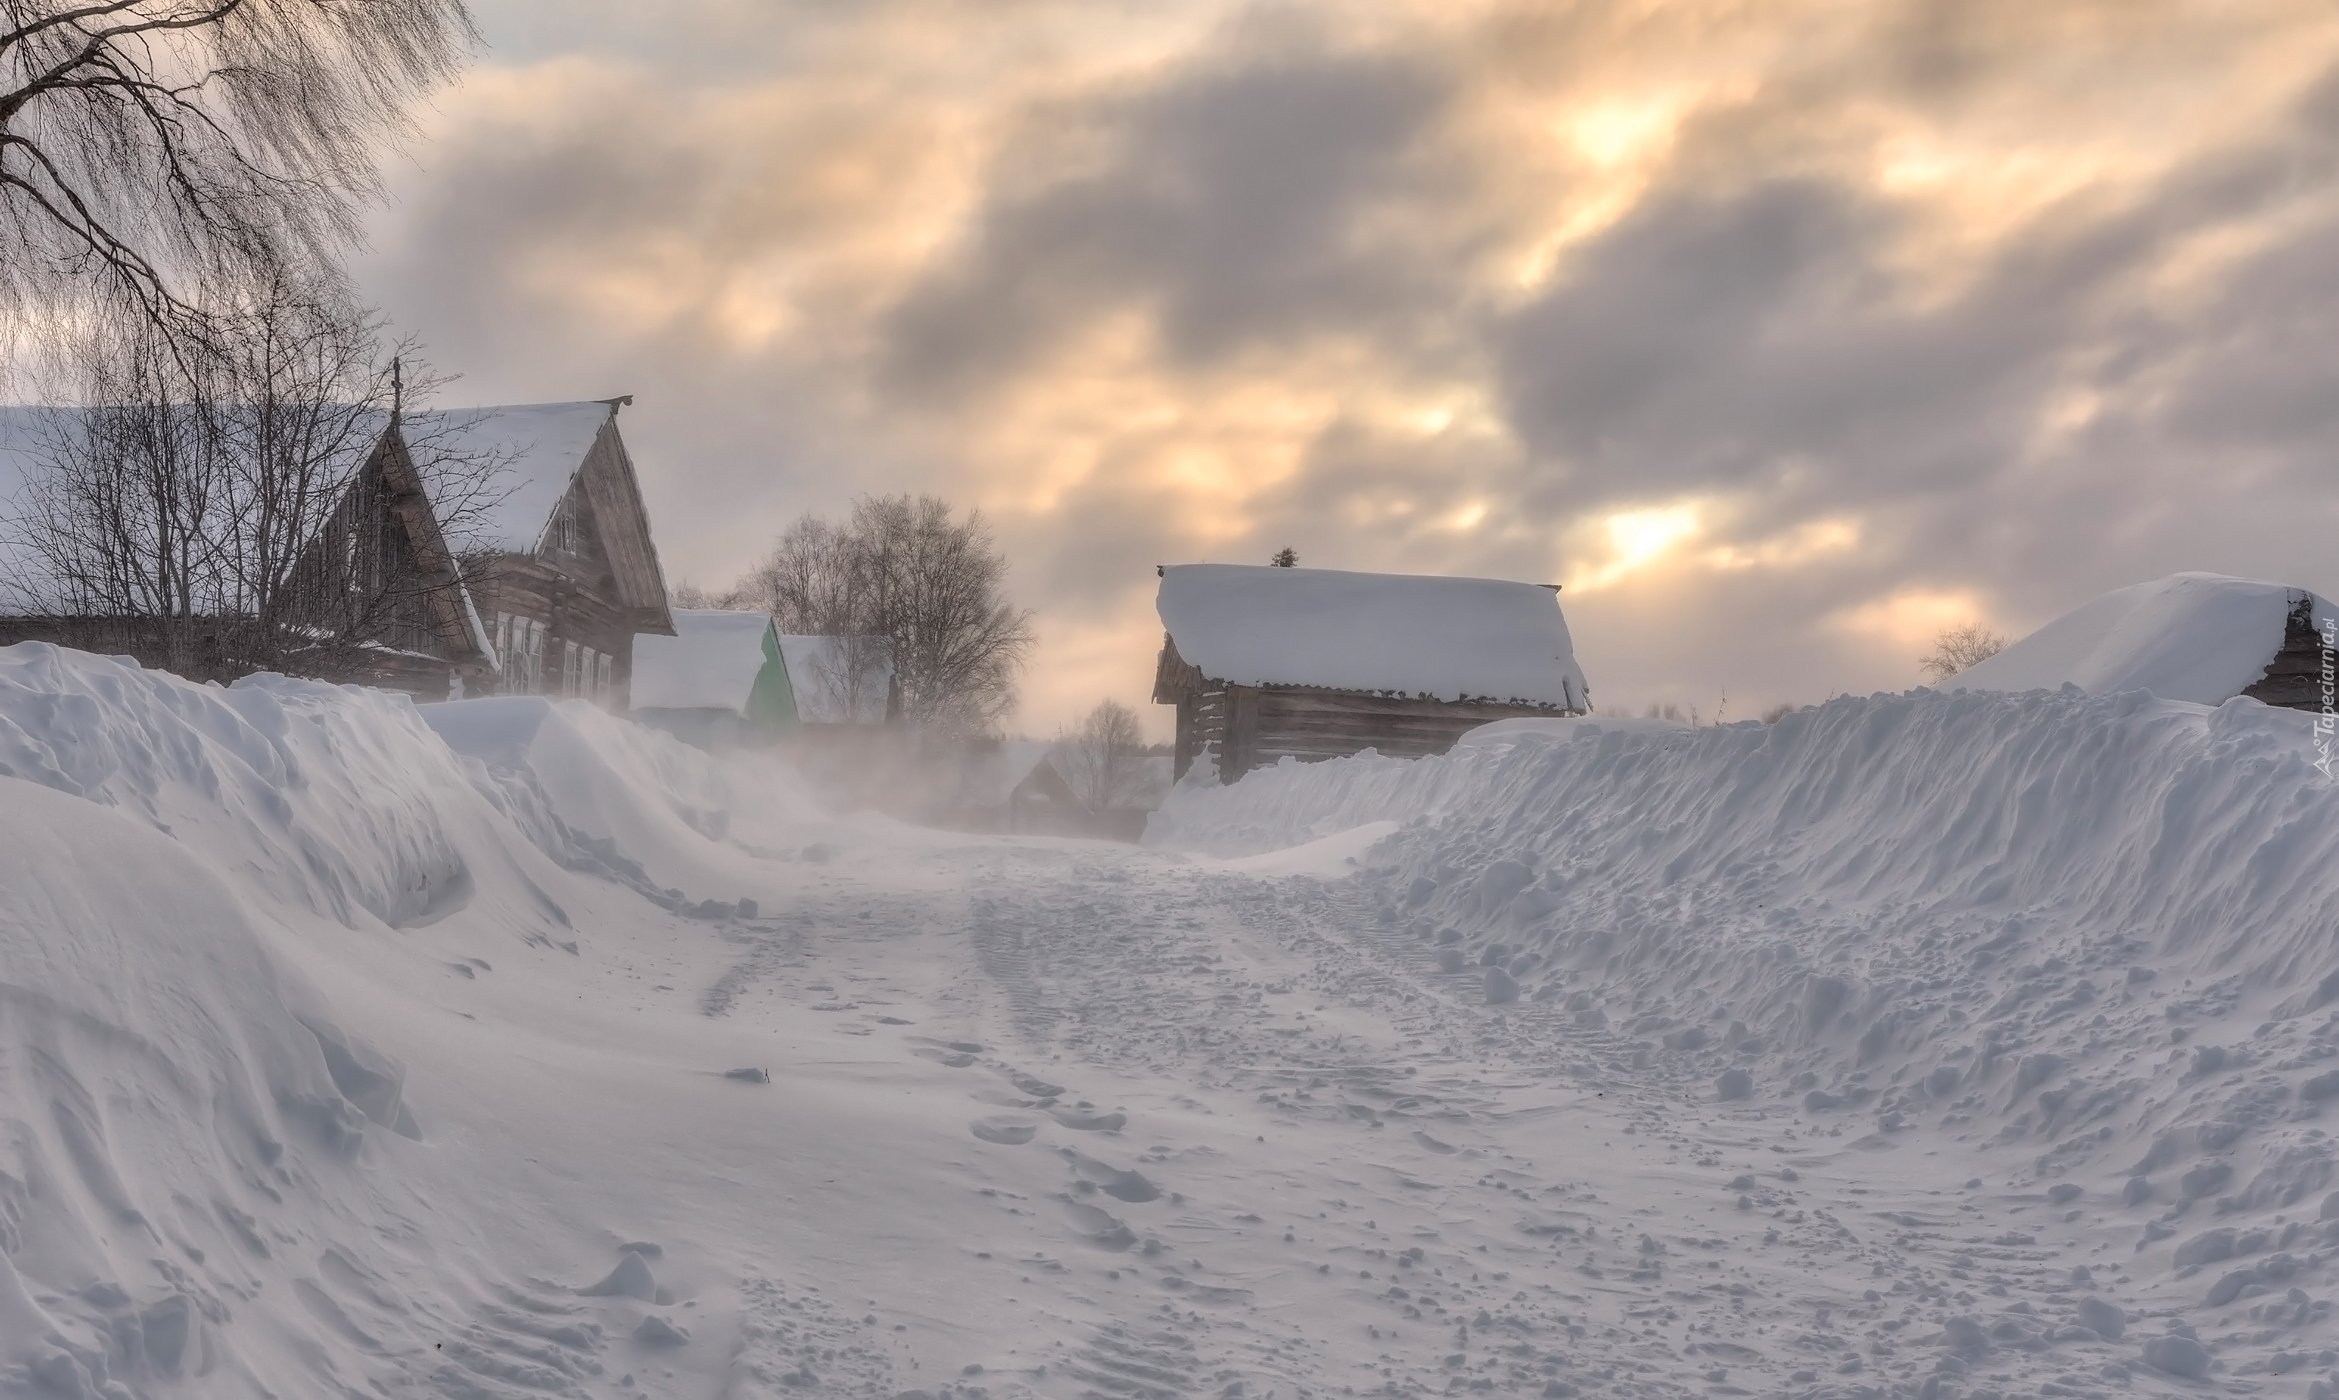 Бушевал буран. Деревня в снегу. Сугробы в деревне. Зима в деревне. Метель в деревне.